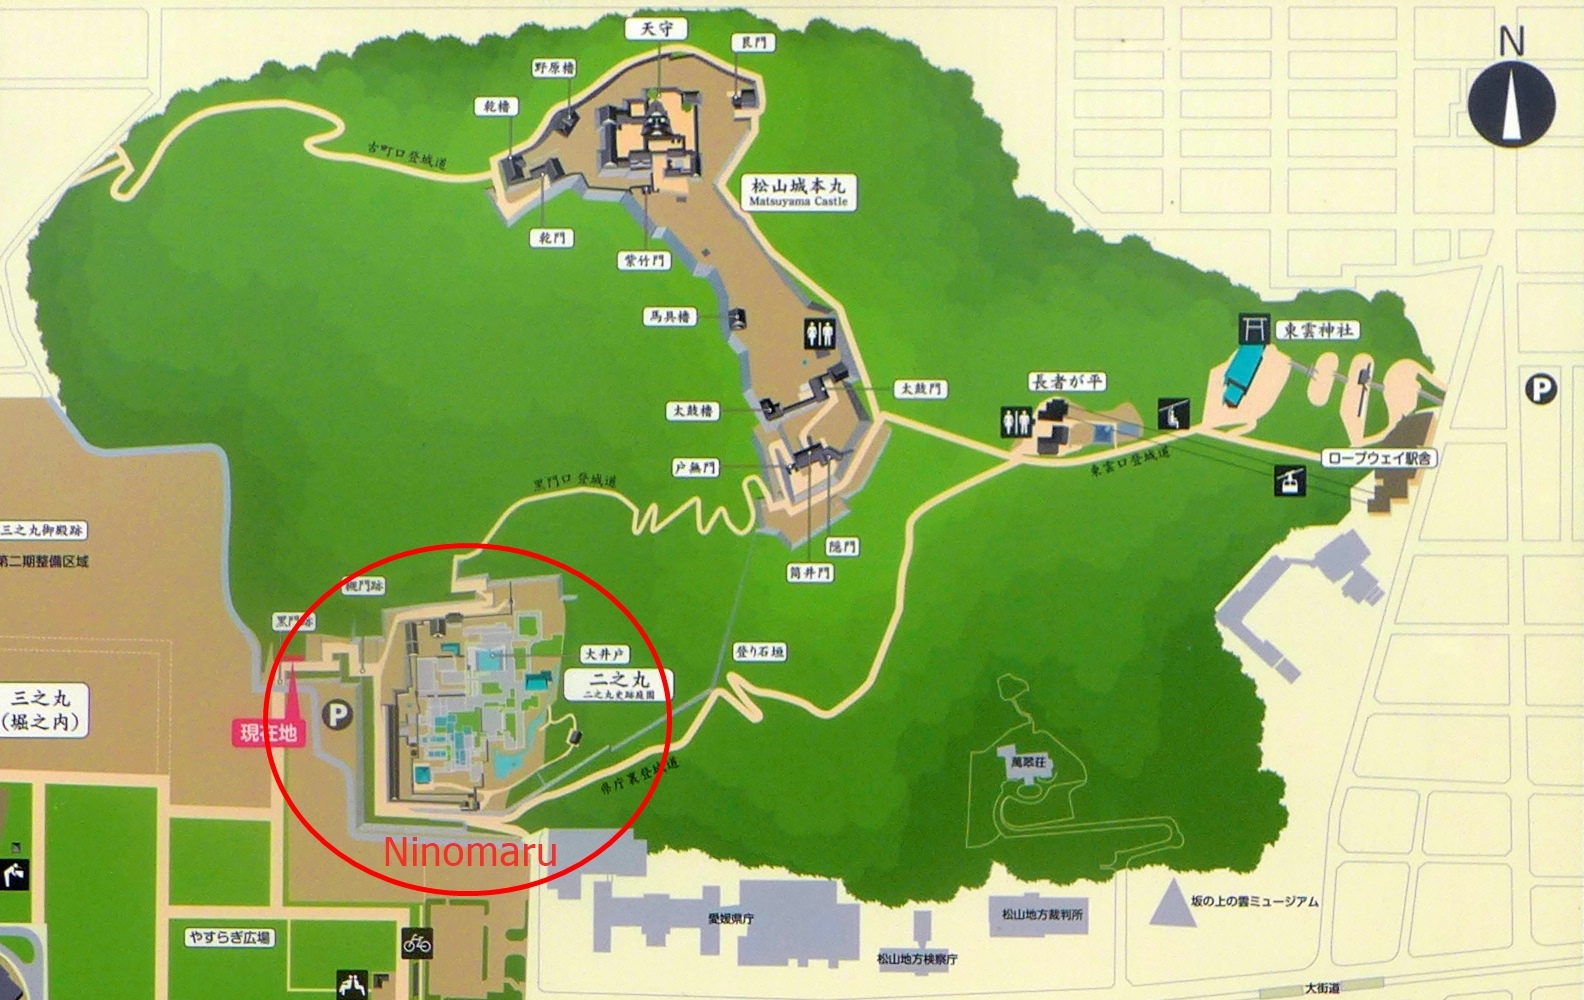 Plan de masse du jardin Ninomaru Shiseki-teien par rapport au château de Matsuyama